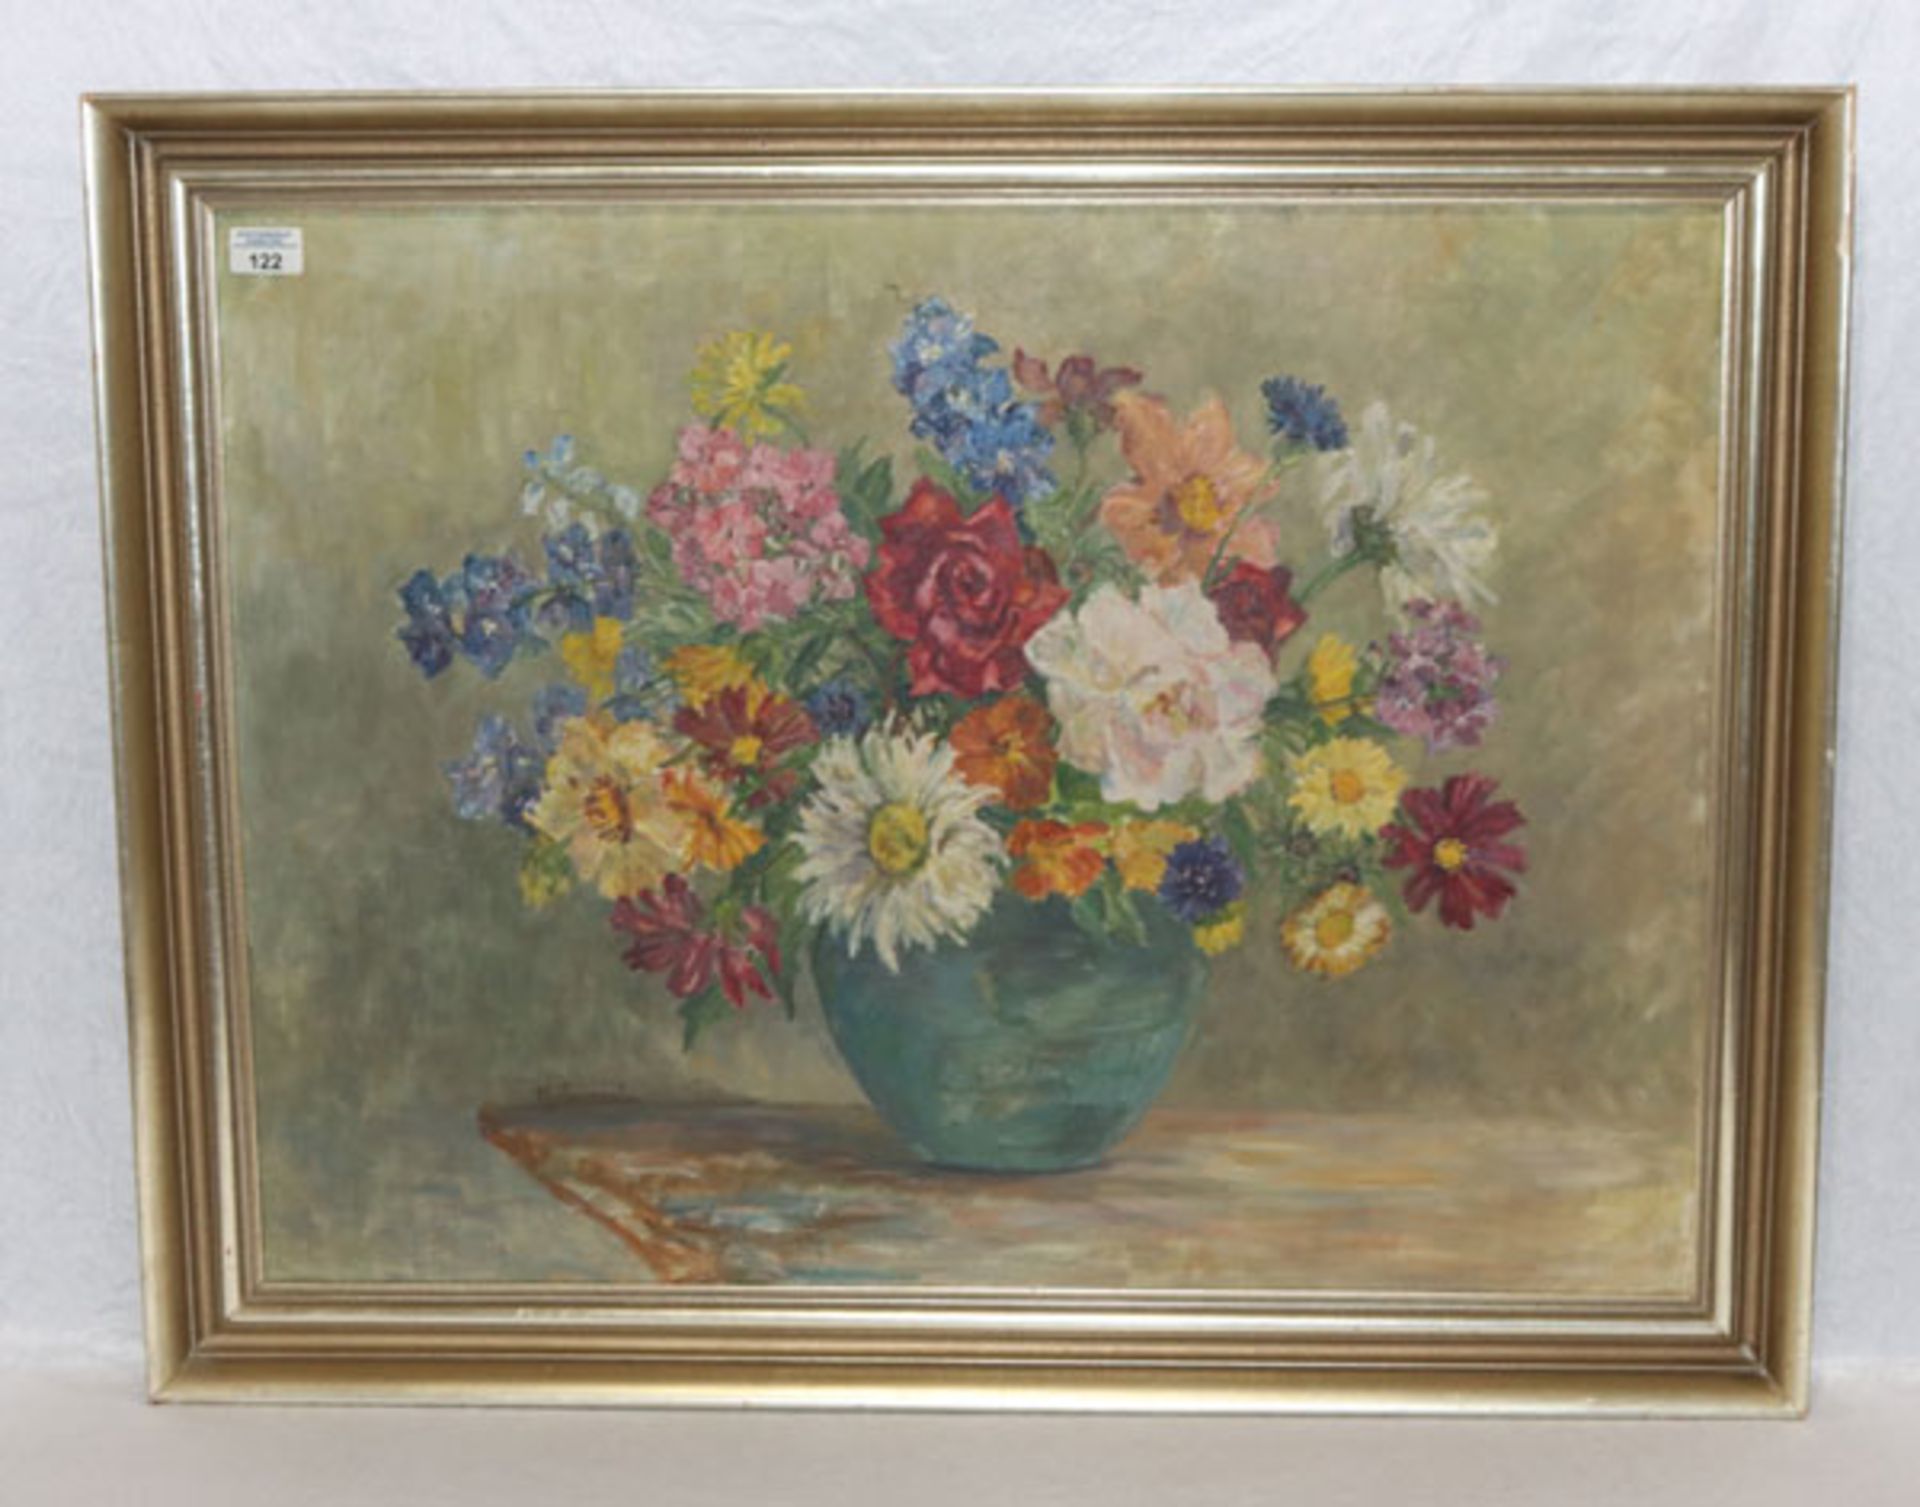 Gemälde ÖL/LW 'Blumenstrauß in Vase', signiert K. Günzel, datiert 71, Käthe, * 14.11.1896 Utzberg/